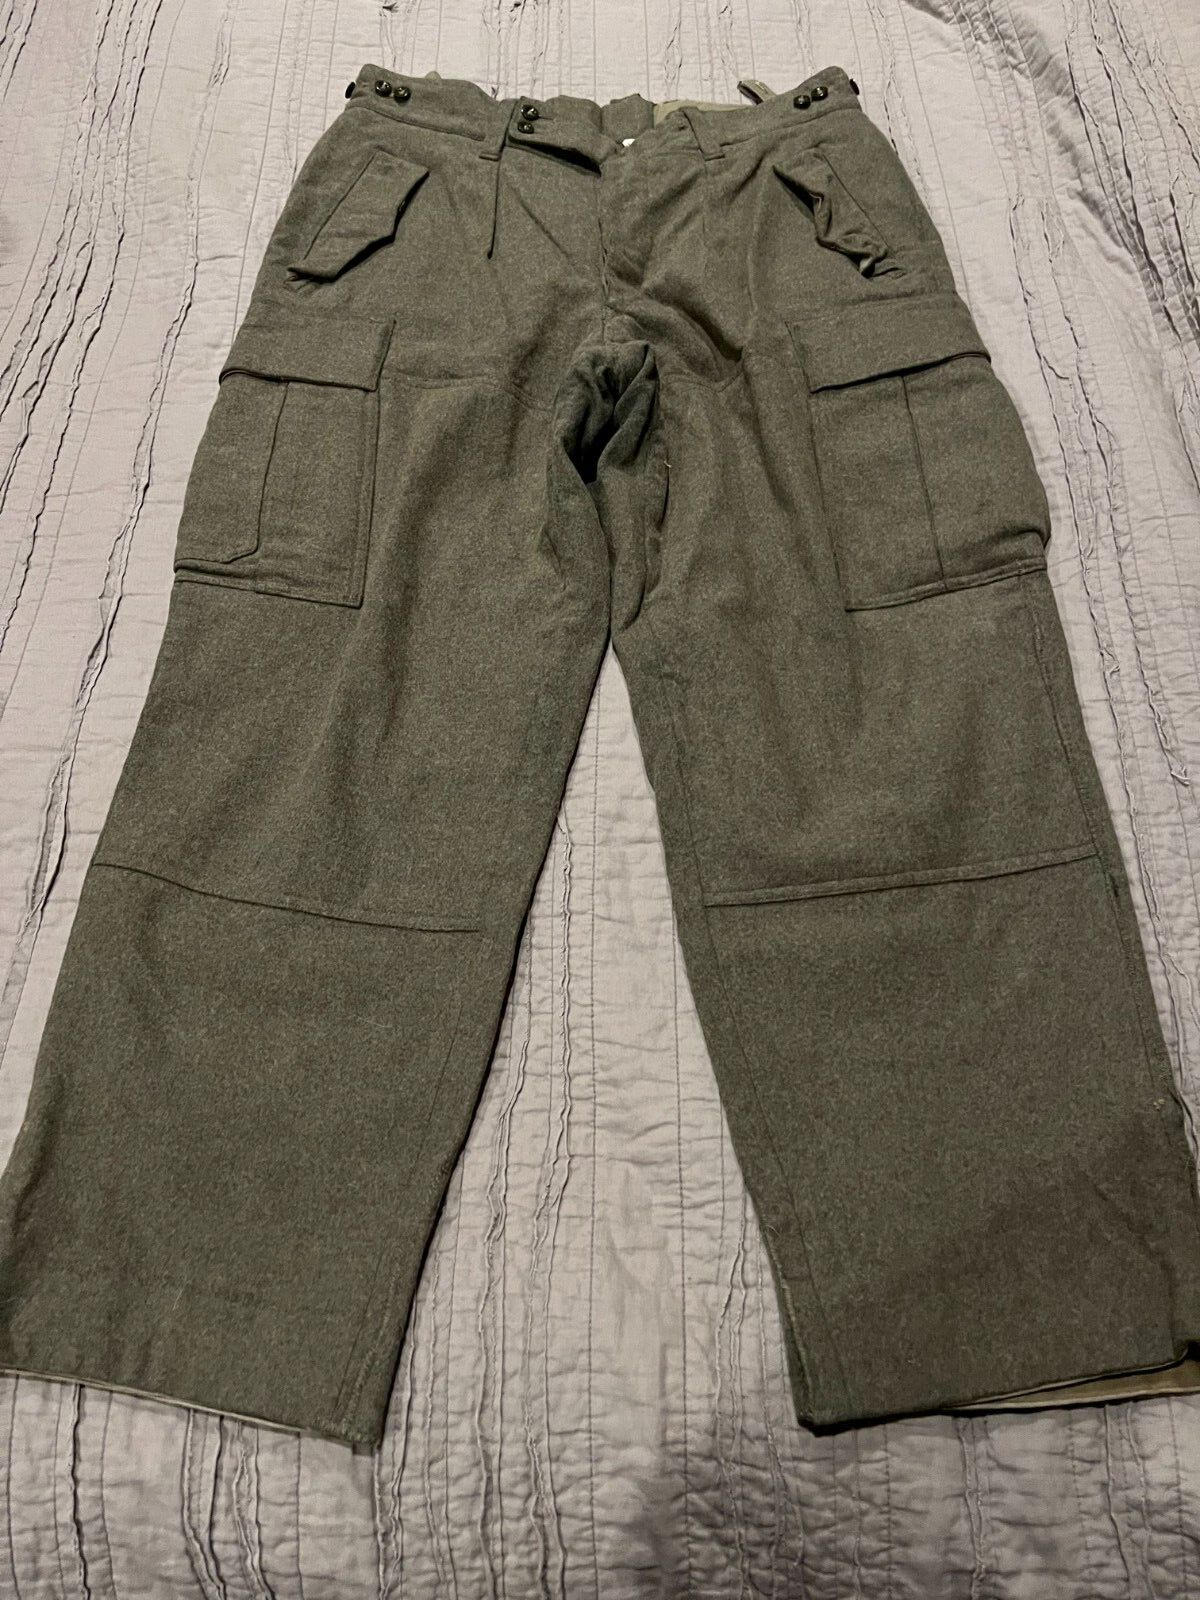 Men\'s Vtg 60s SEYNTEX Khaki Green Wool Military Button Fly Cargo Pants 35 x 28.5